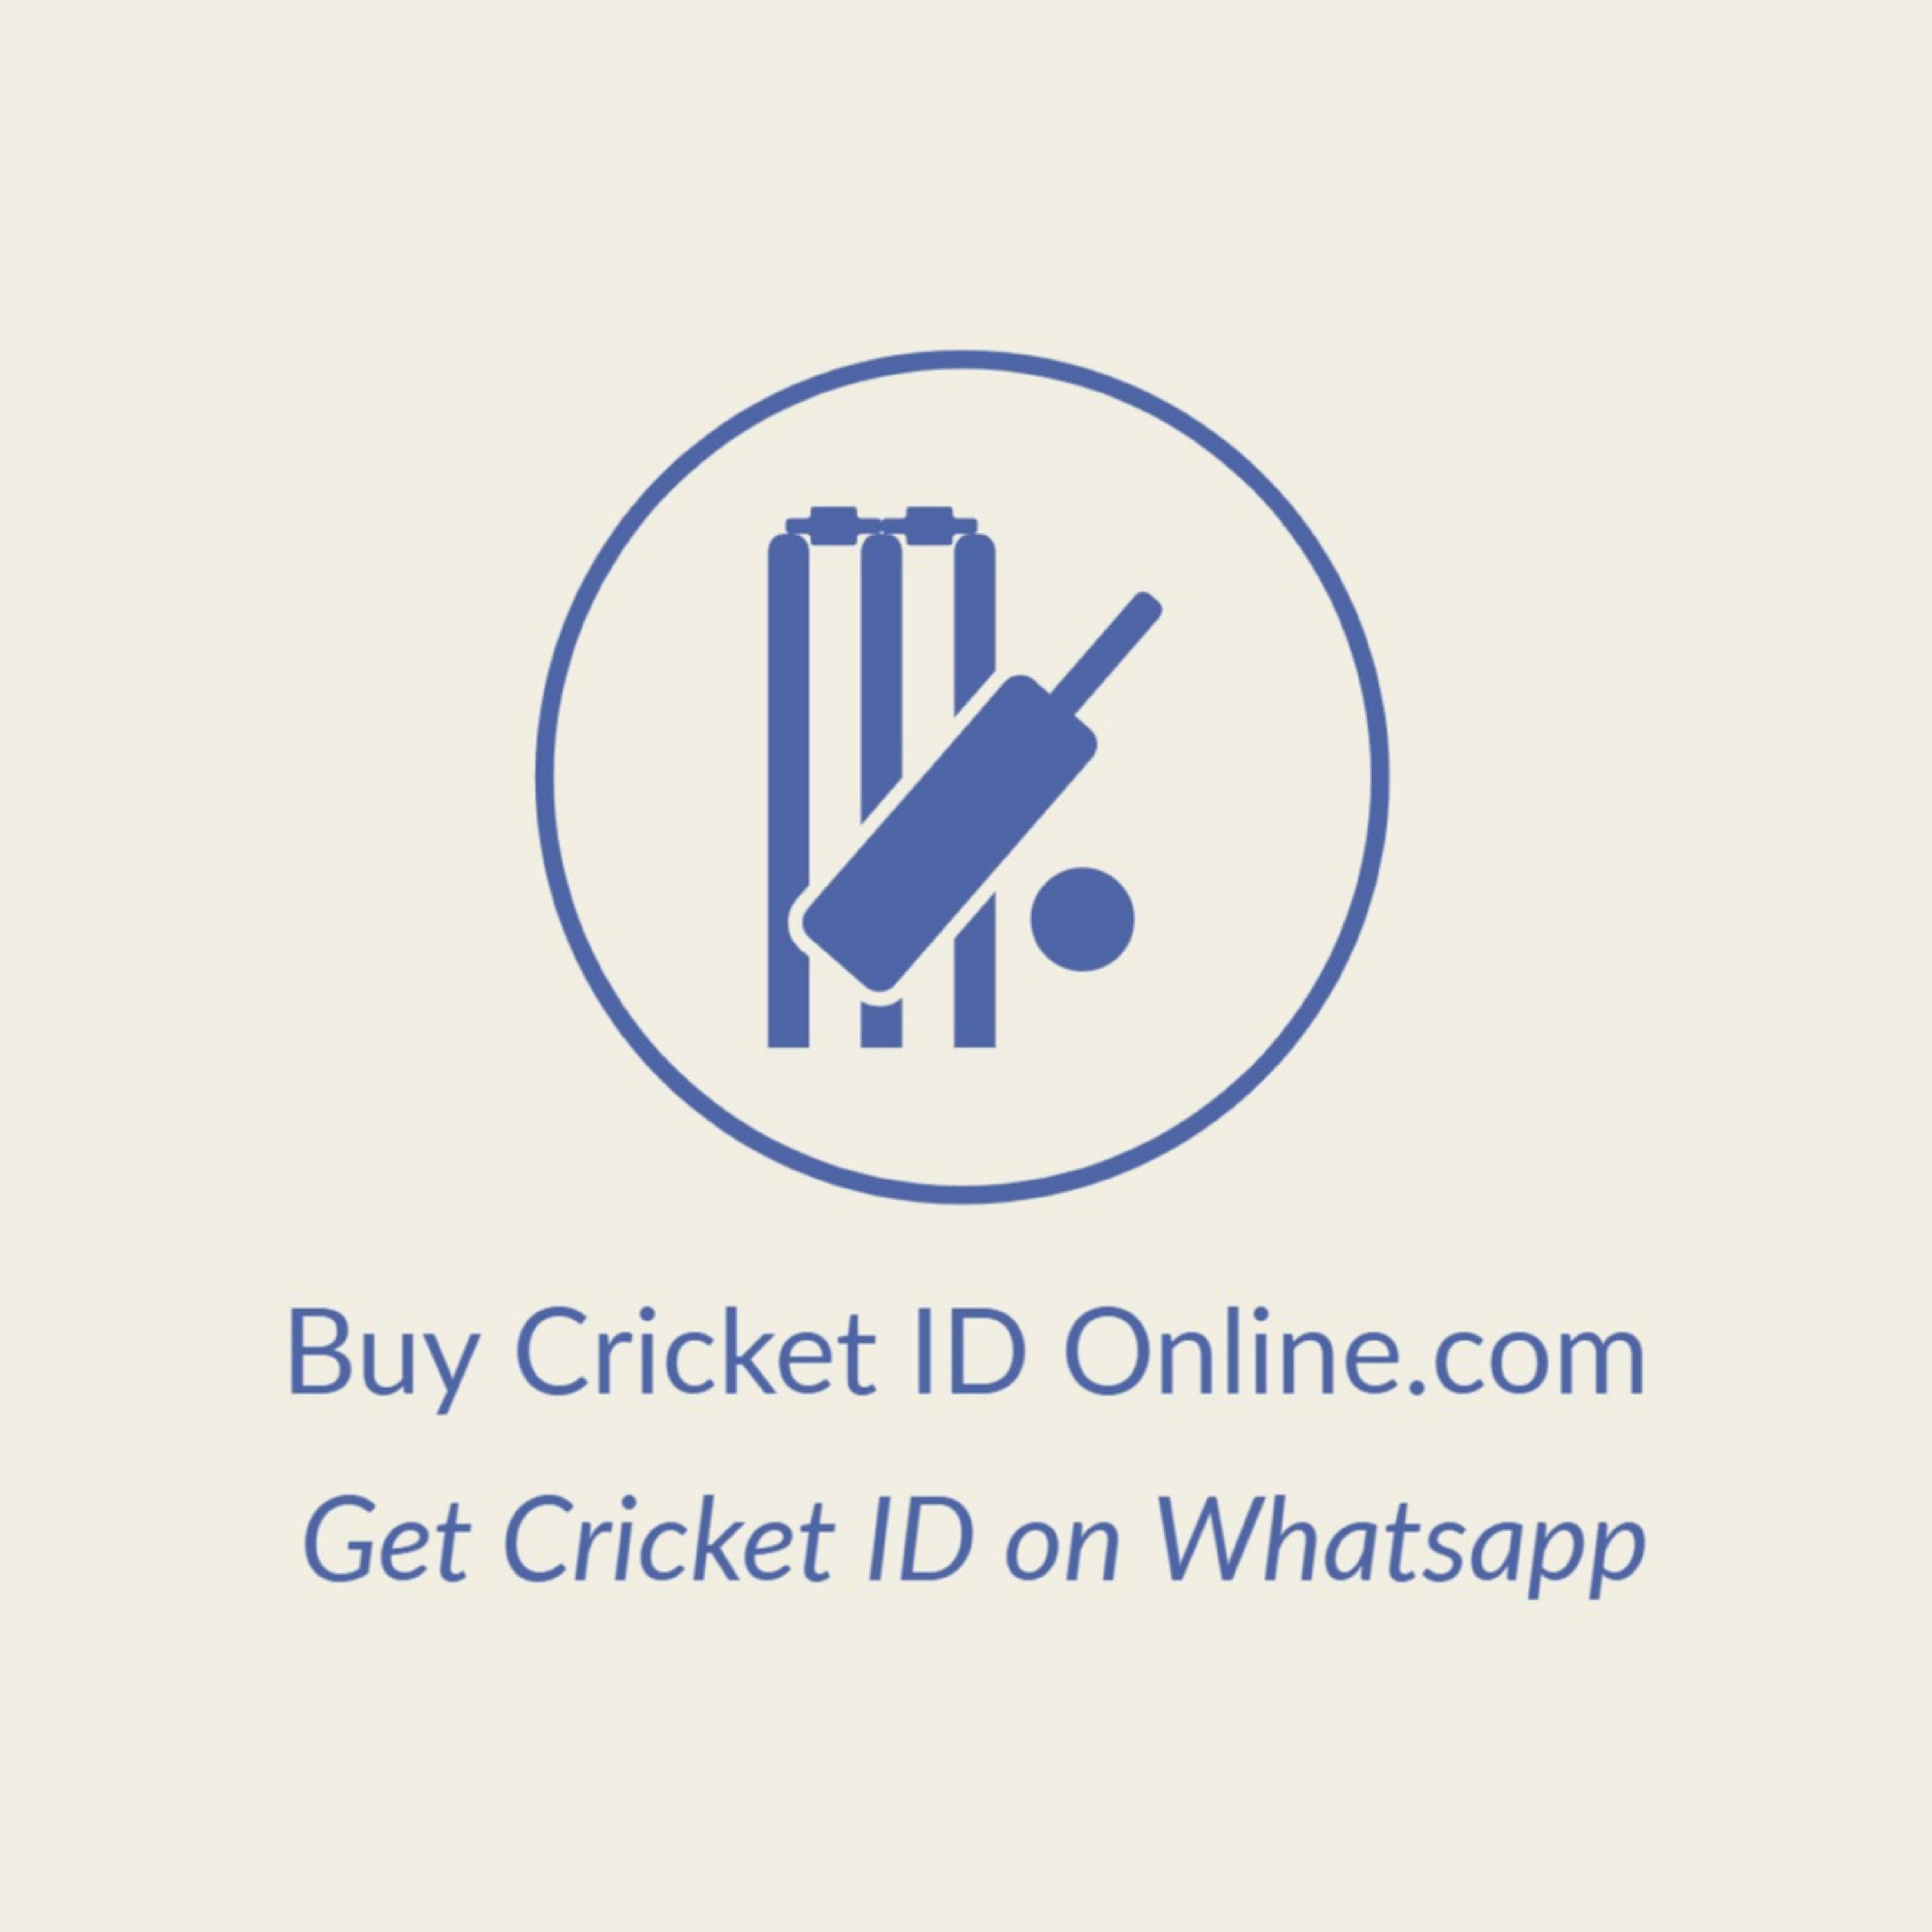 Buy Cricket ID Online